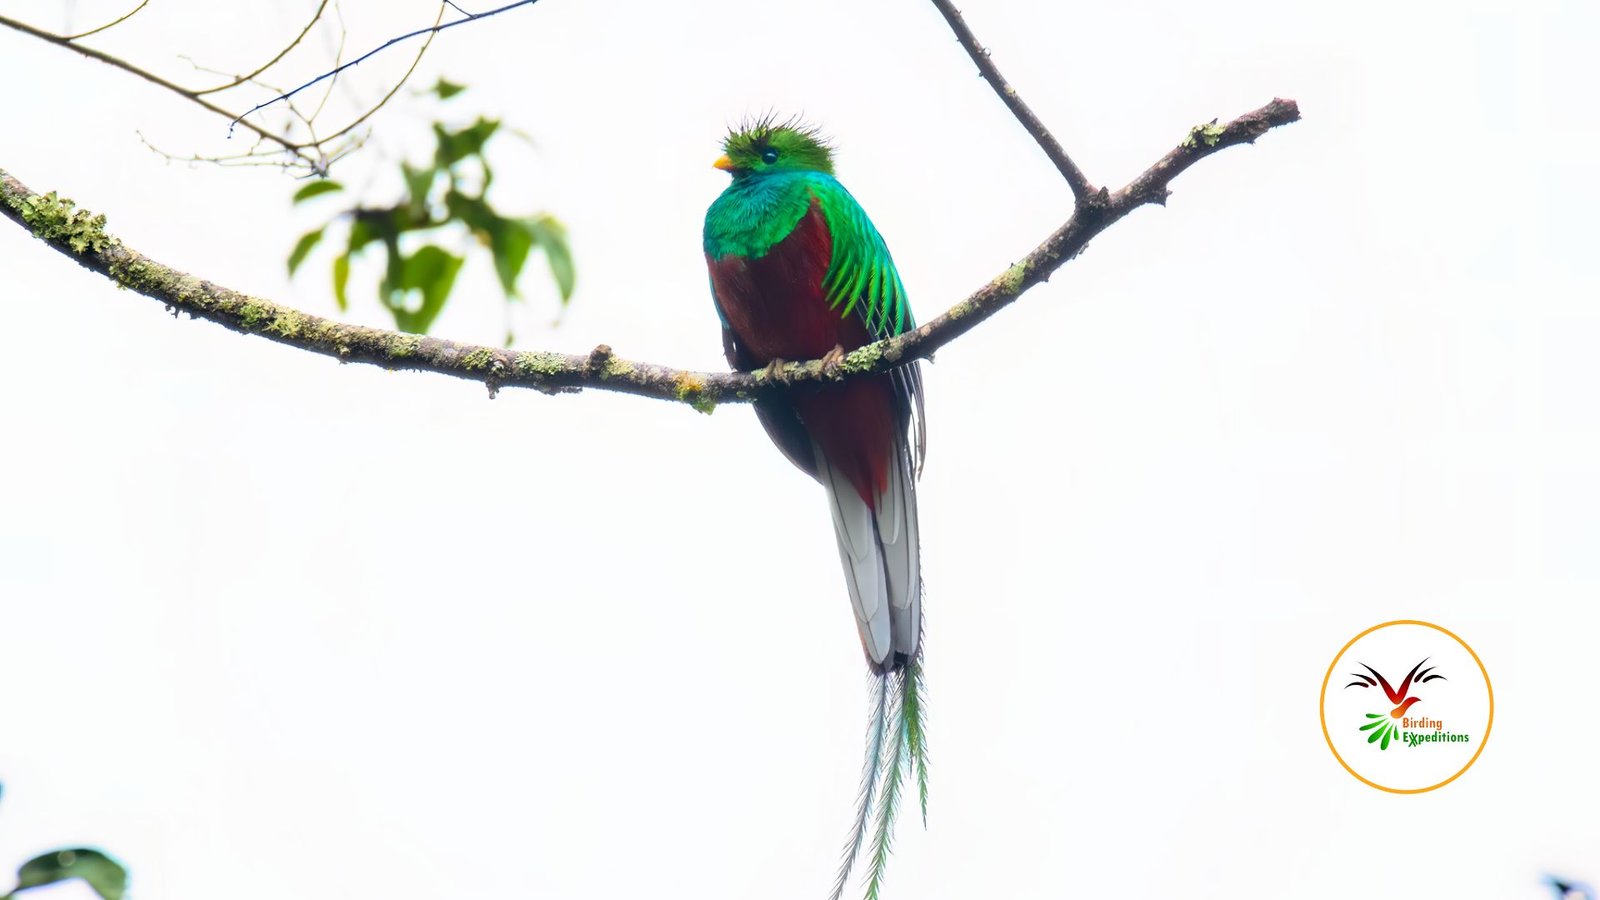 Resplendent Quertzal spotted durign Birding Expeditions Birding & Cultural Tour in Guatemala